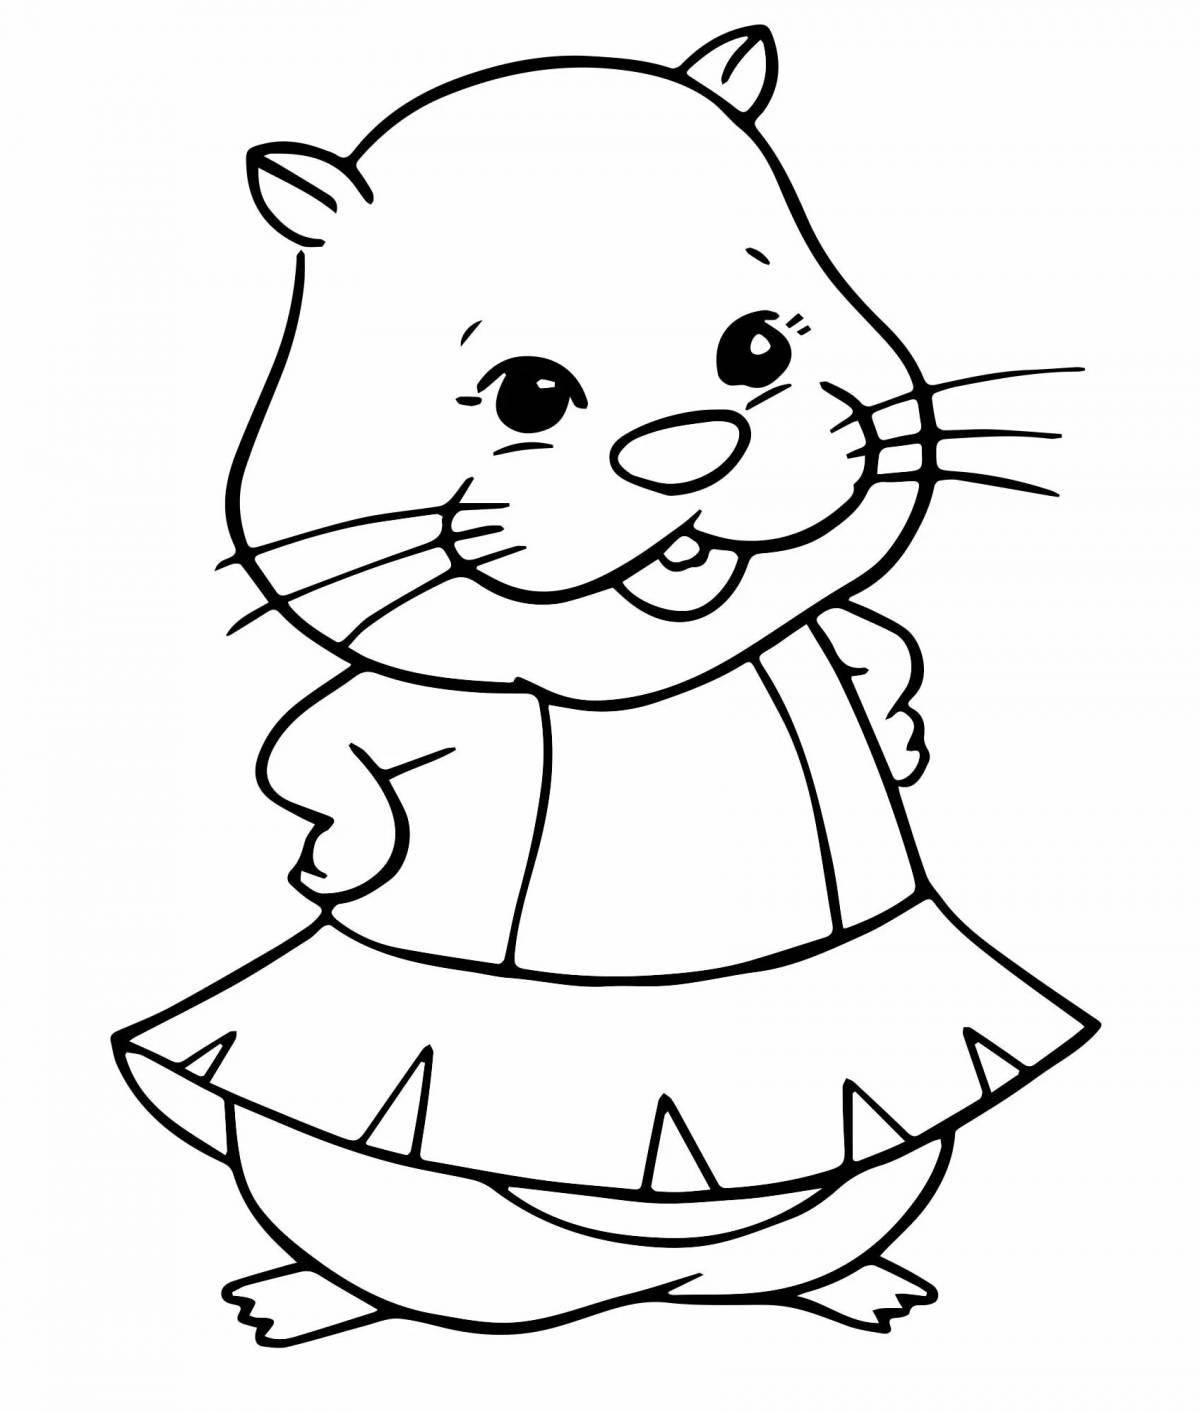 Fluffy hamster coloring for kids